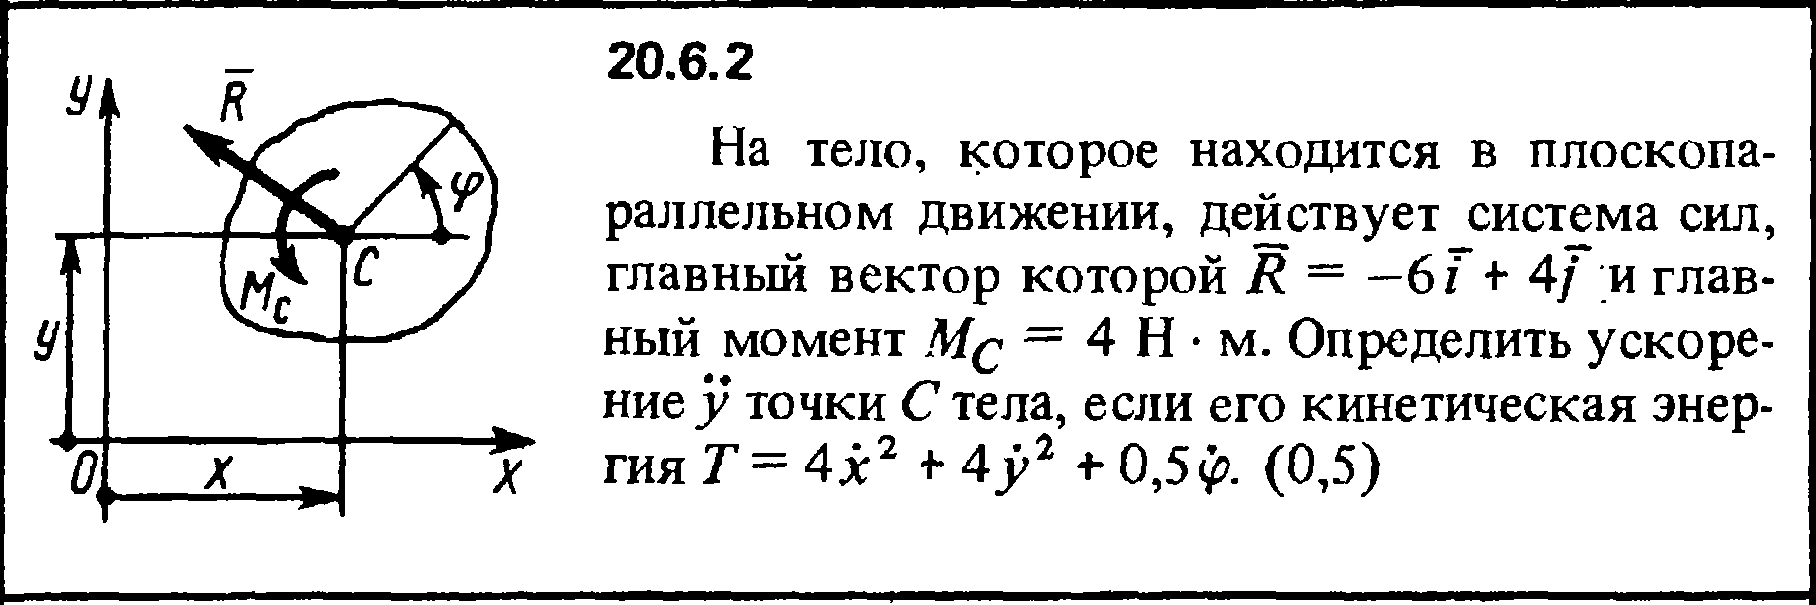 Решение 20.6.2 из сборника (решебника) Кепе О.Е. 1989